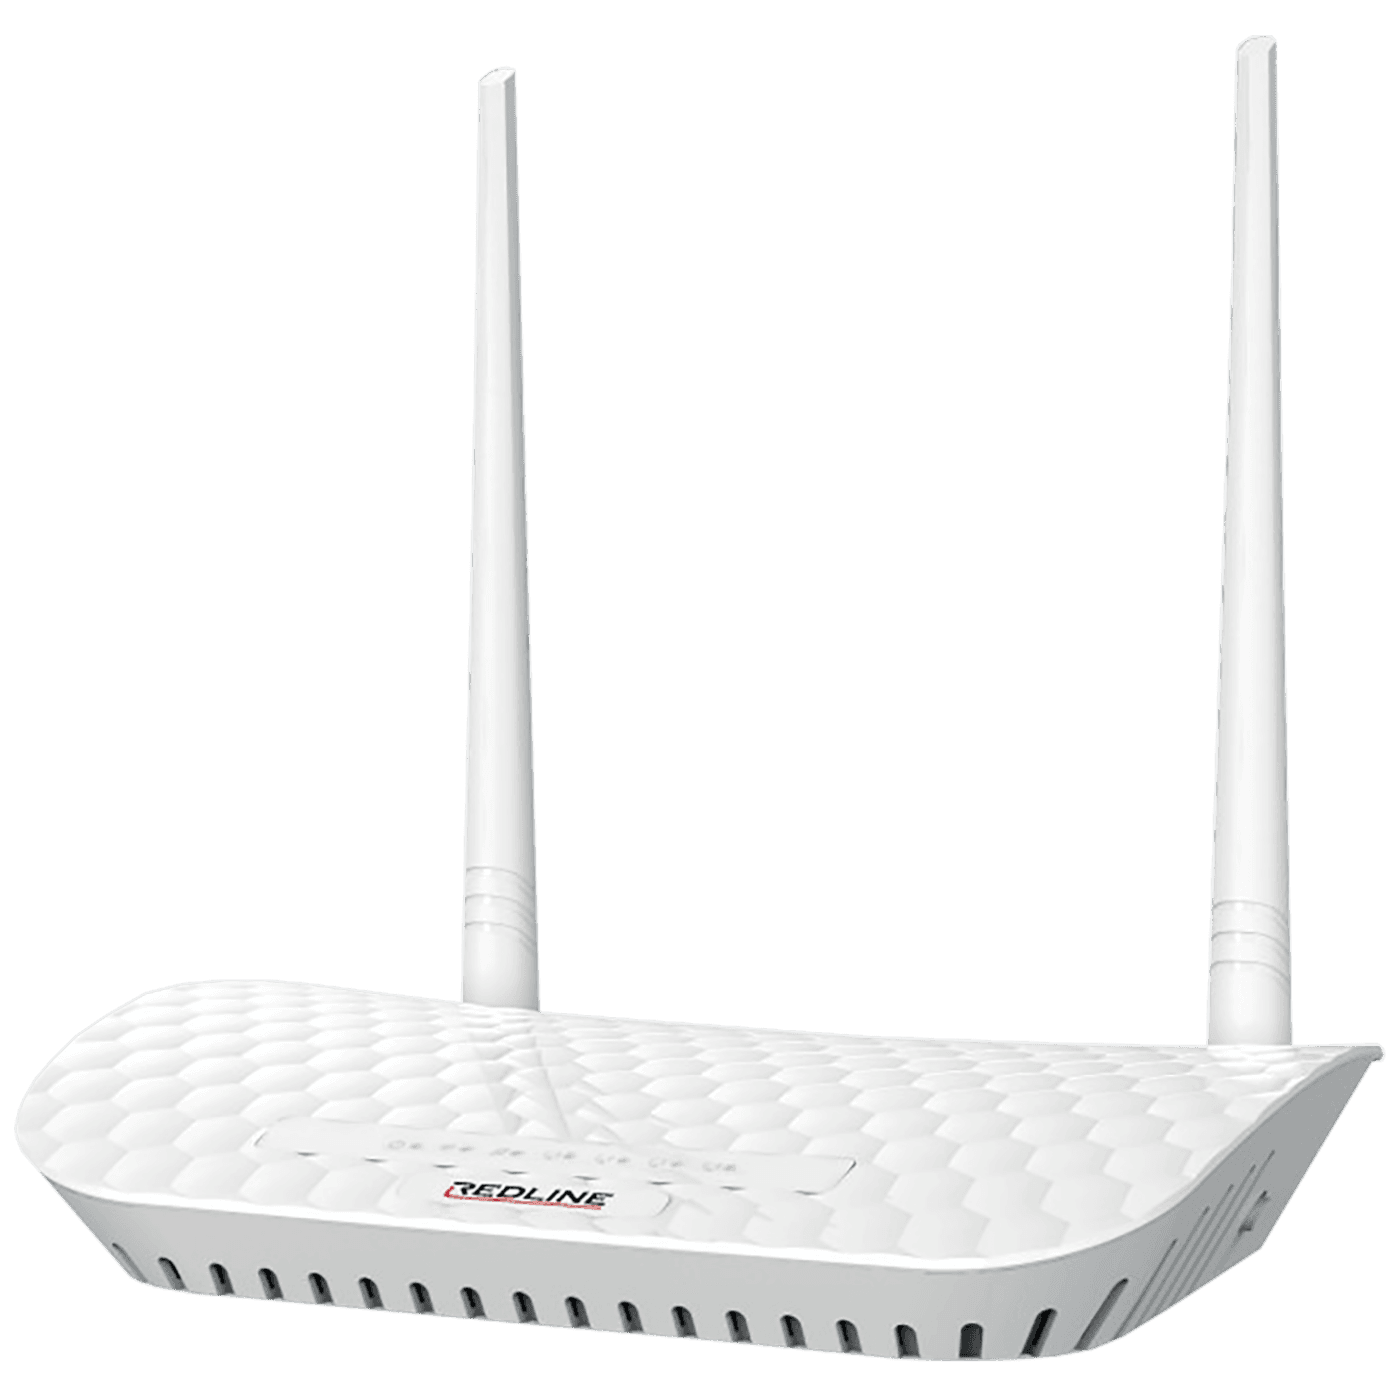 REDLINE Wireless N Router 4 porta 300Mbps 2 x 5 dBi antena